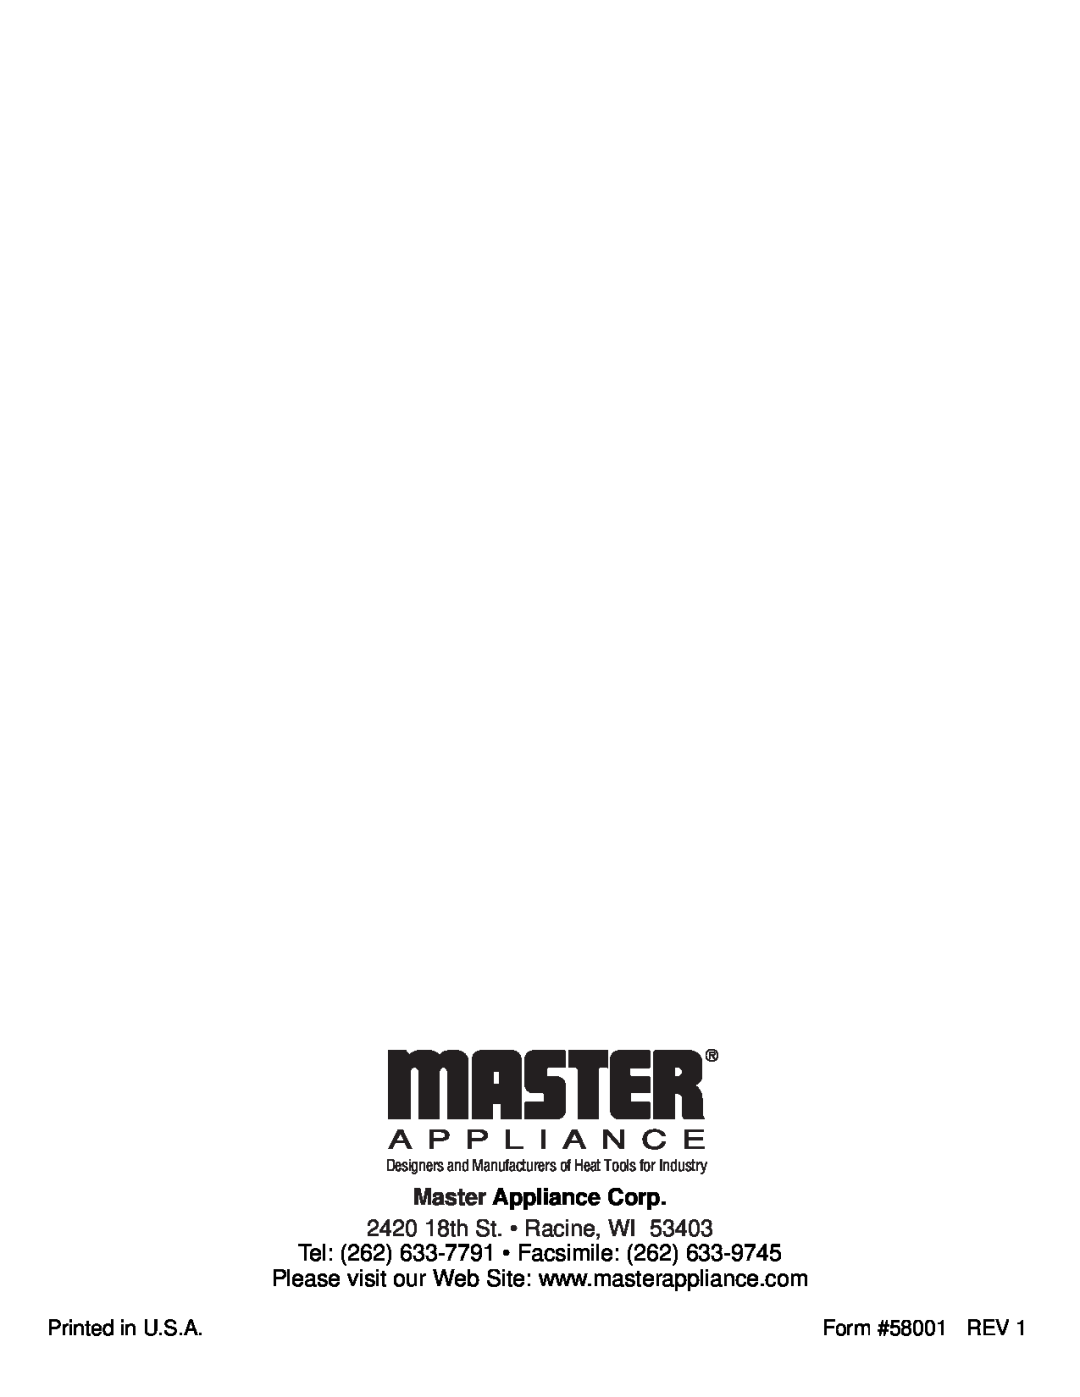 Master Appliance 1425-3550 FPM130-900F Master Appliance Corp, 2420 18th St. Racine, WI Tel 262 633-7791 Facsimile 262 